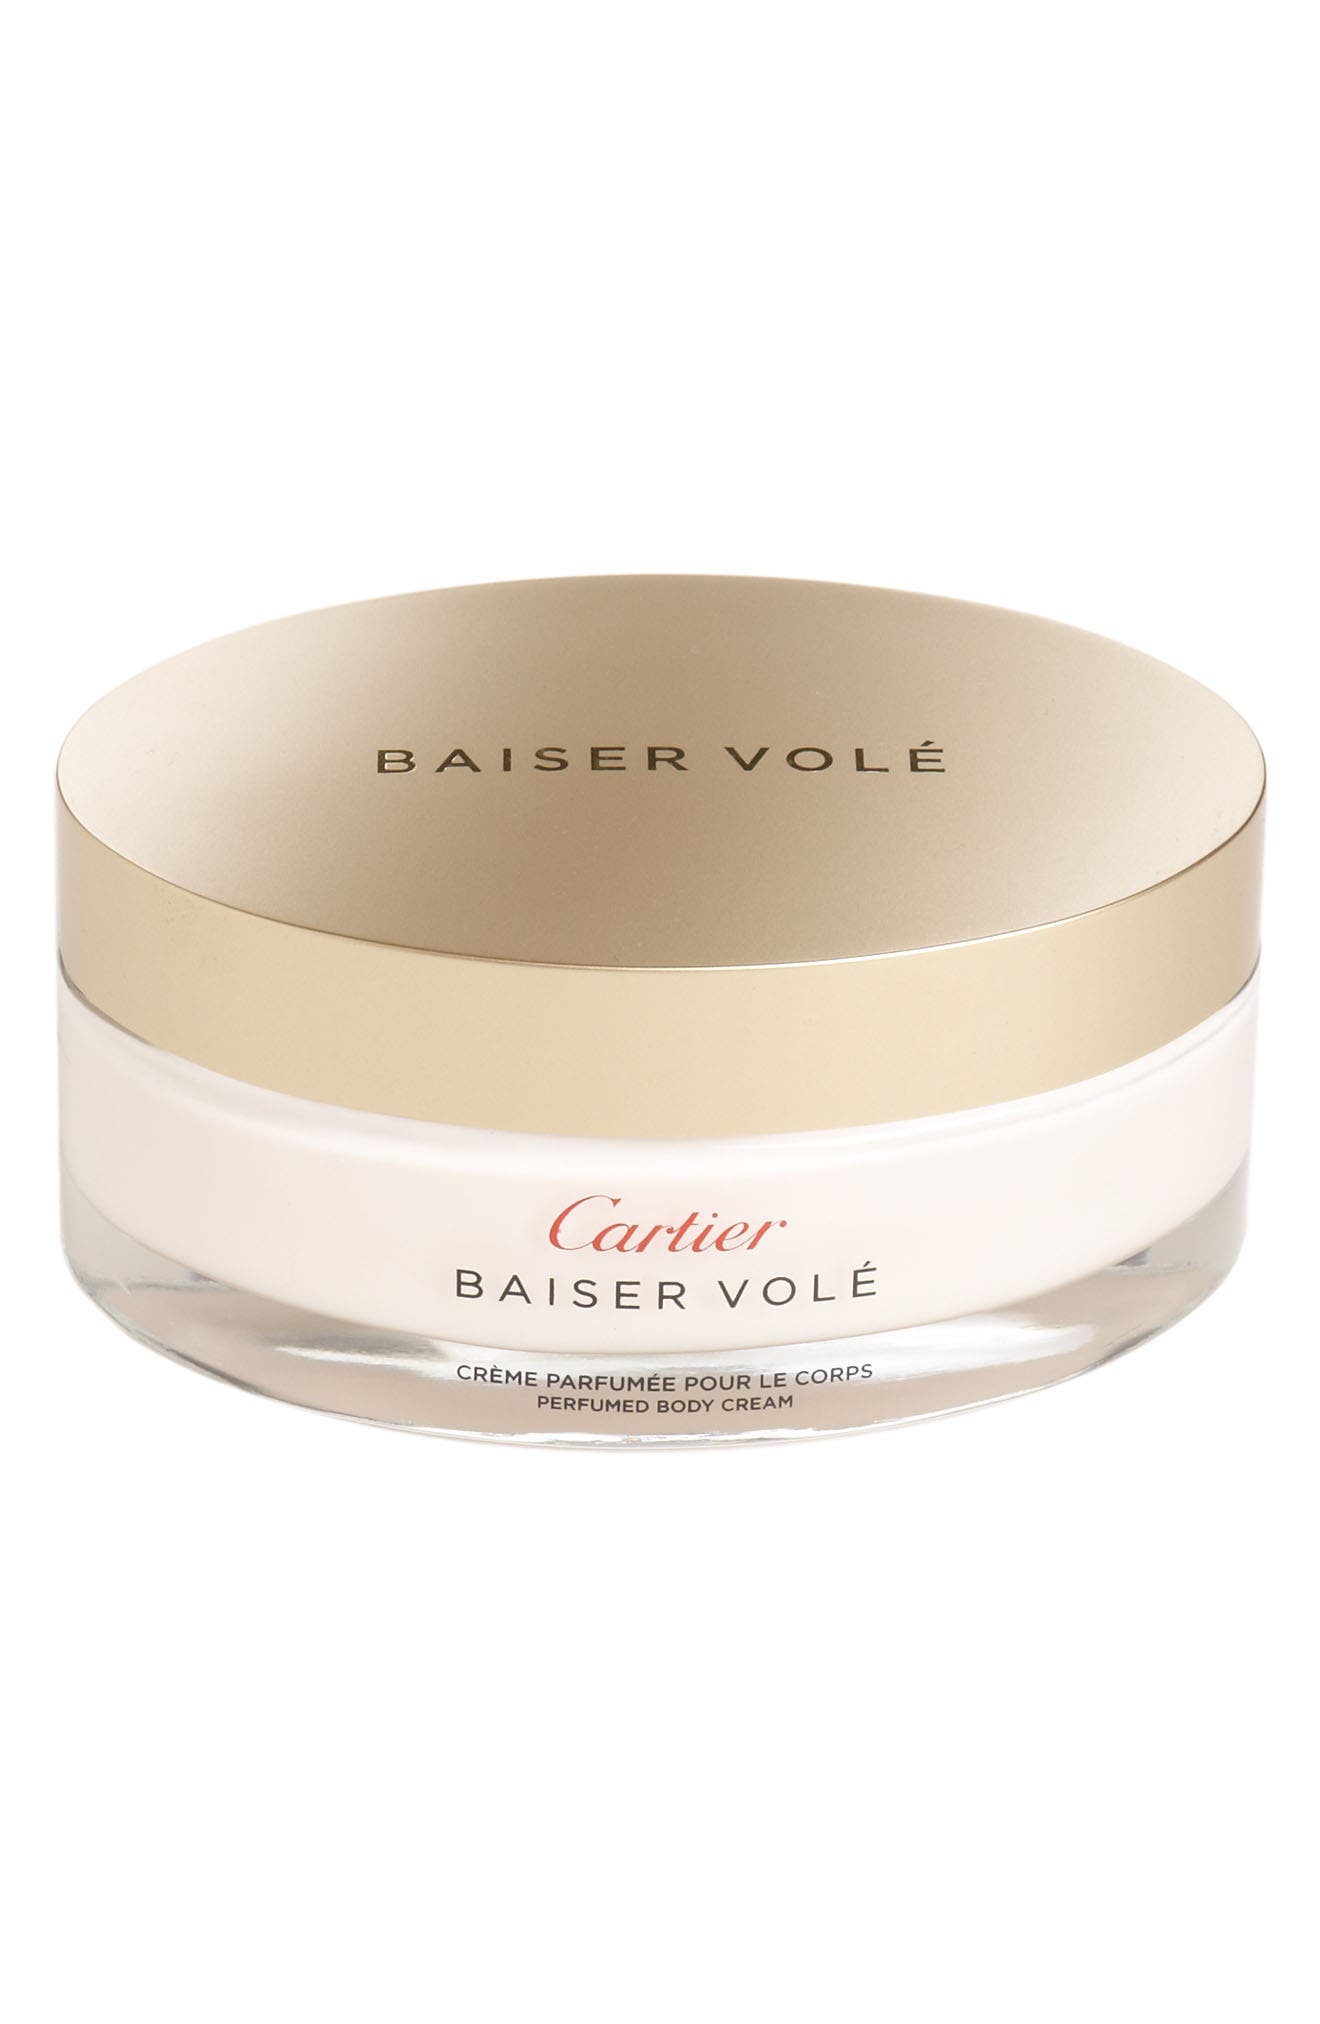 Cartier 'Baiser Vole' Body Cream at Nordstrom, Size 6.7 Oz